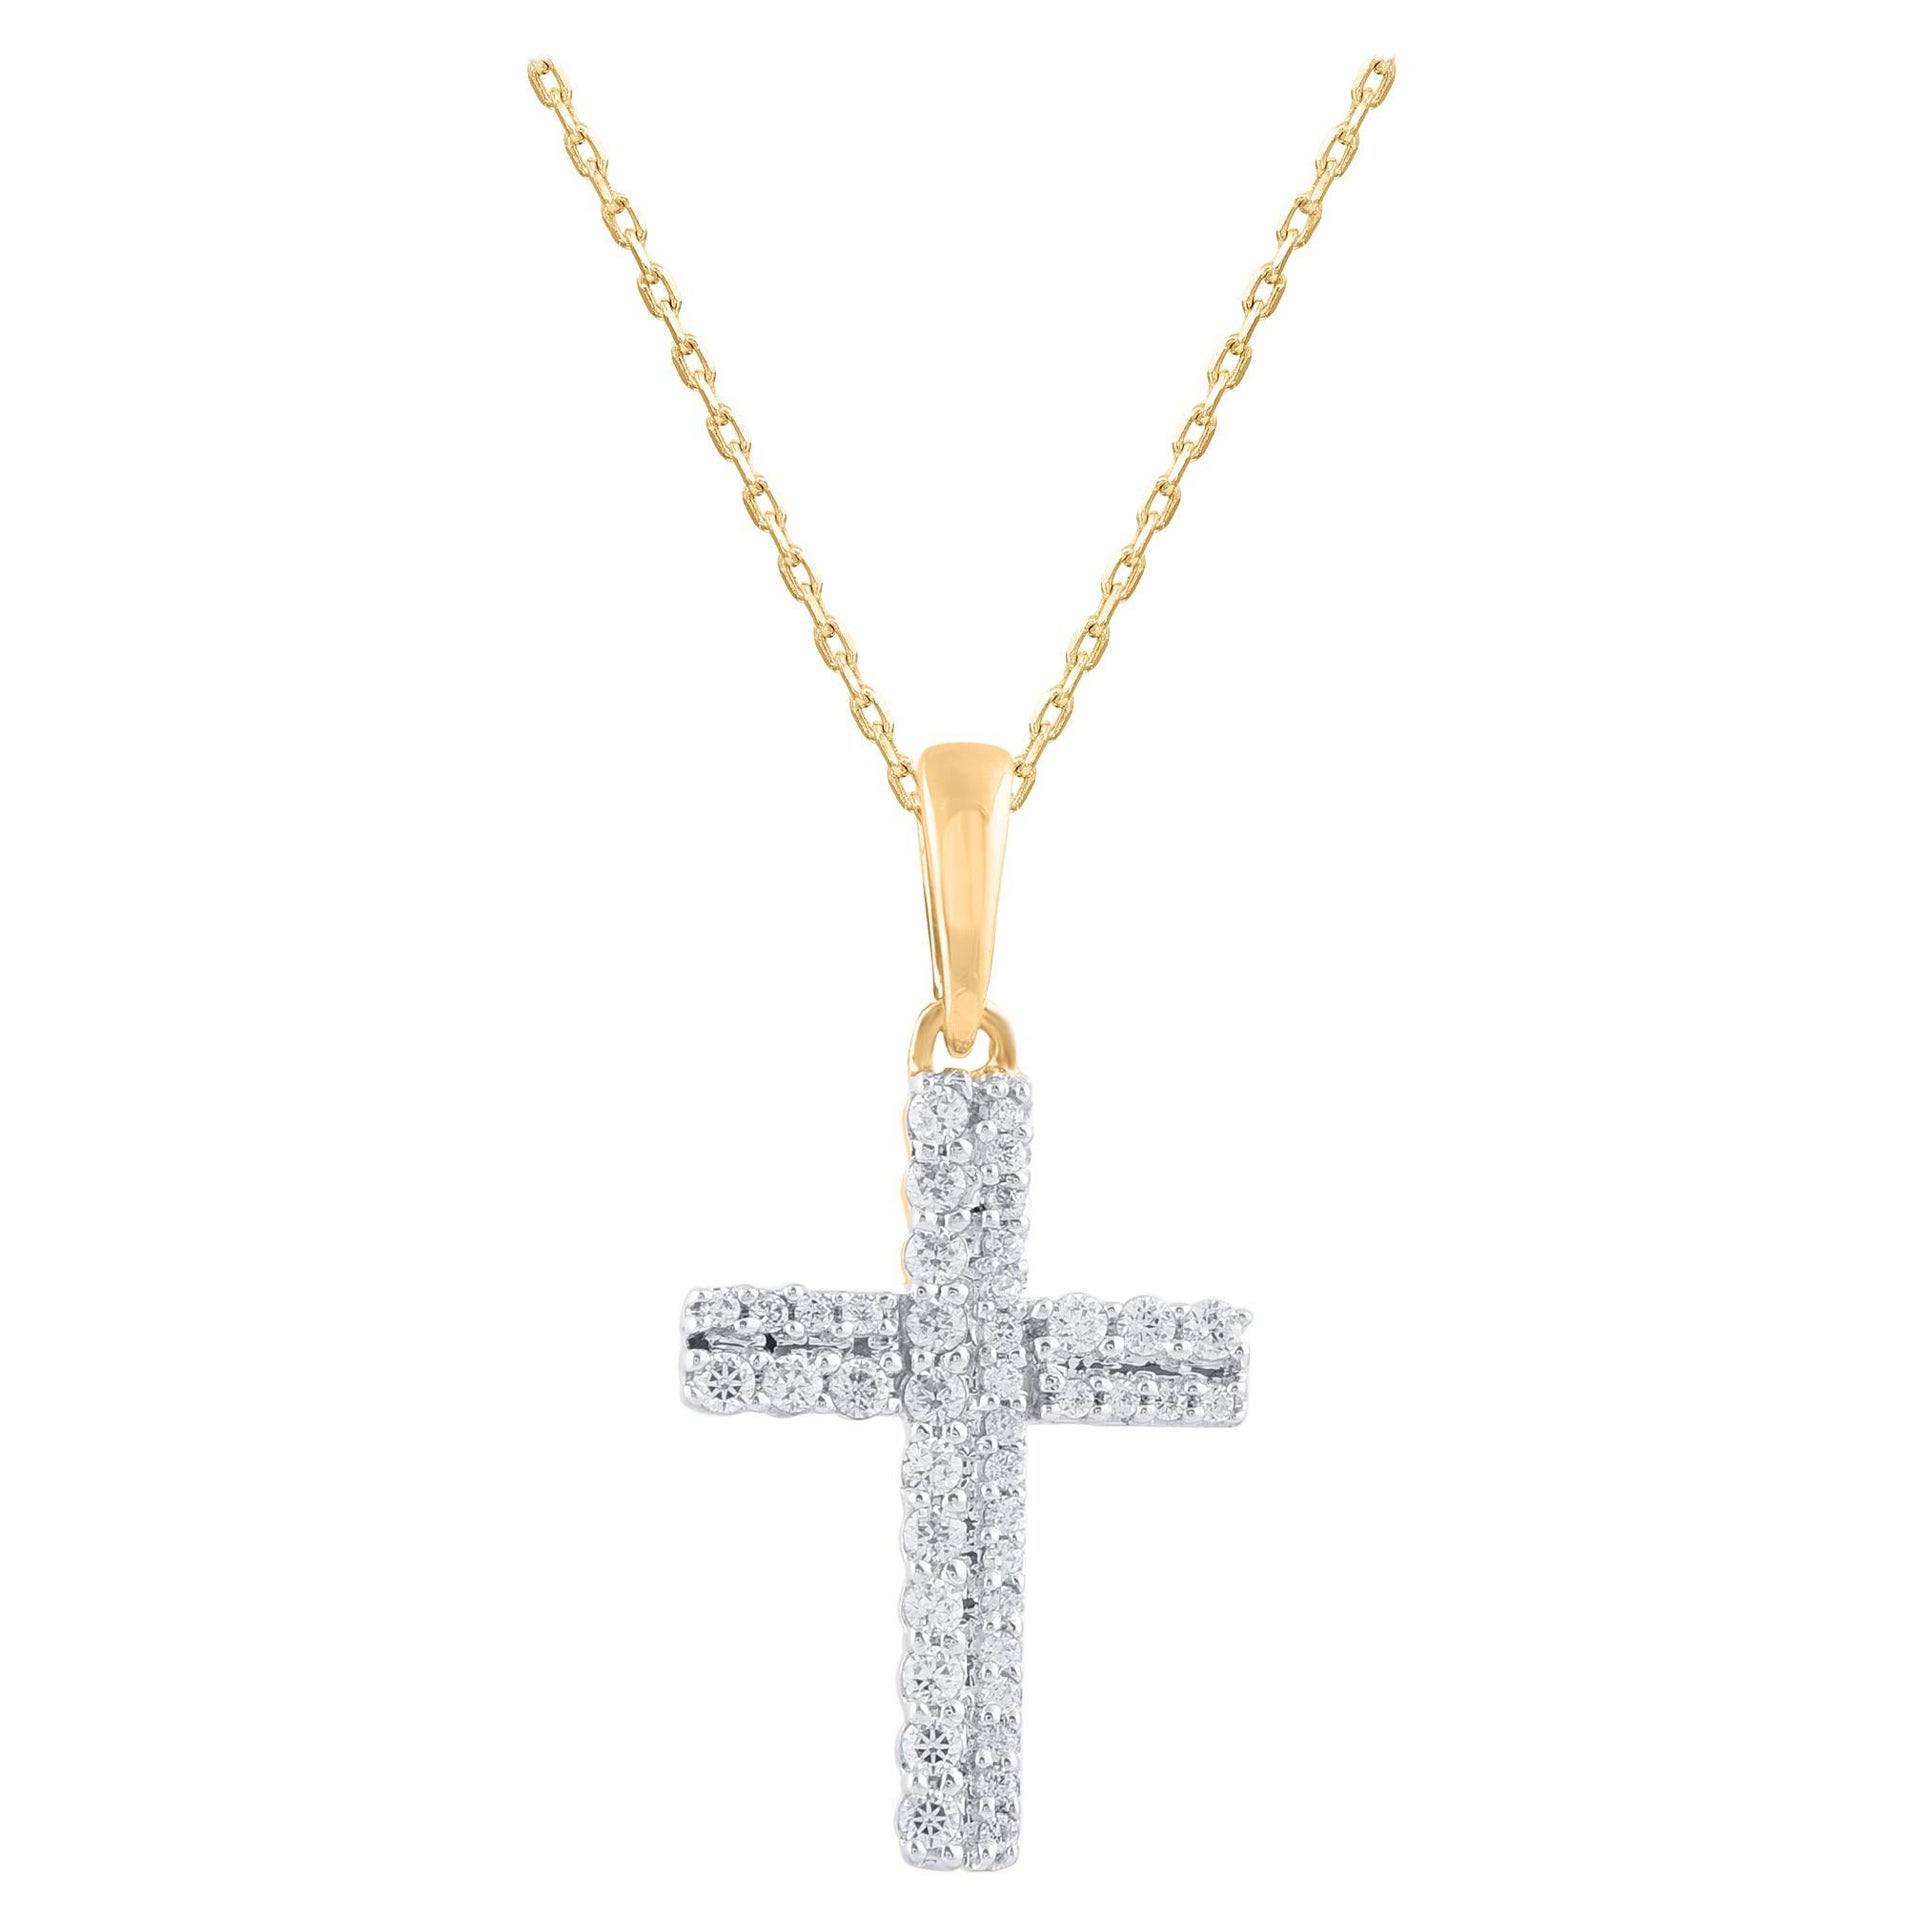 TJD 0.20 Carat Round Cut Diamond Cross Pendant Necklace in 14 Karat Yellow Gold